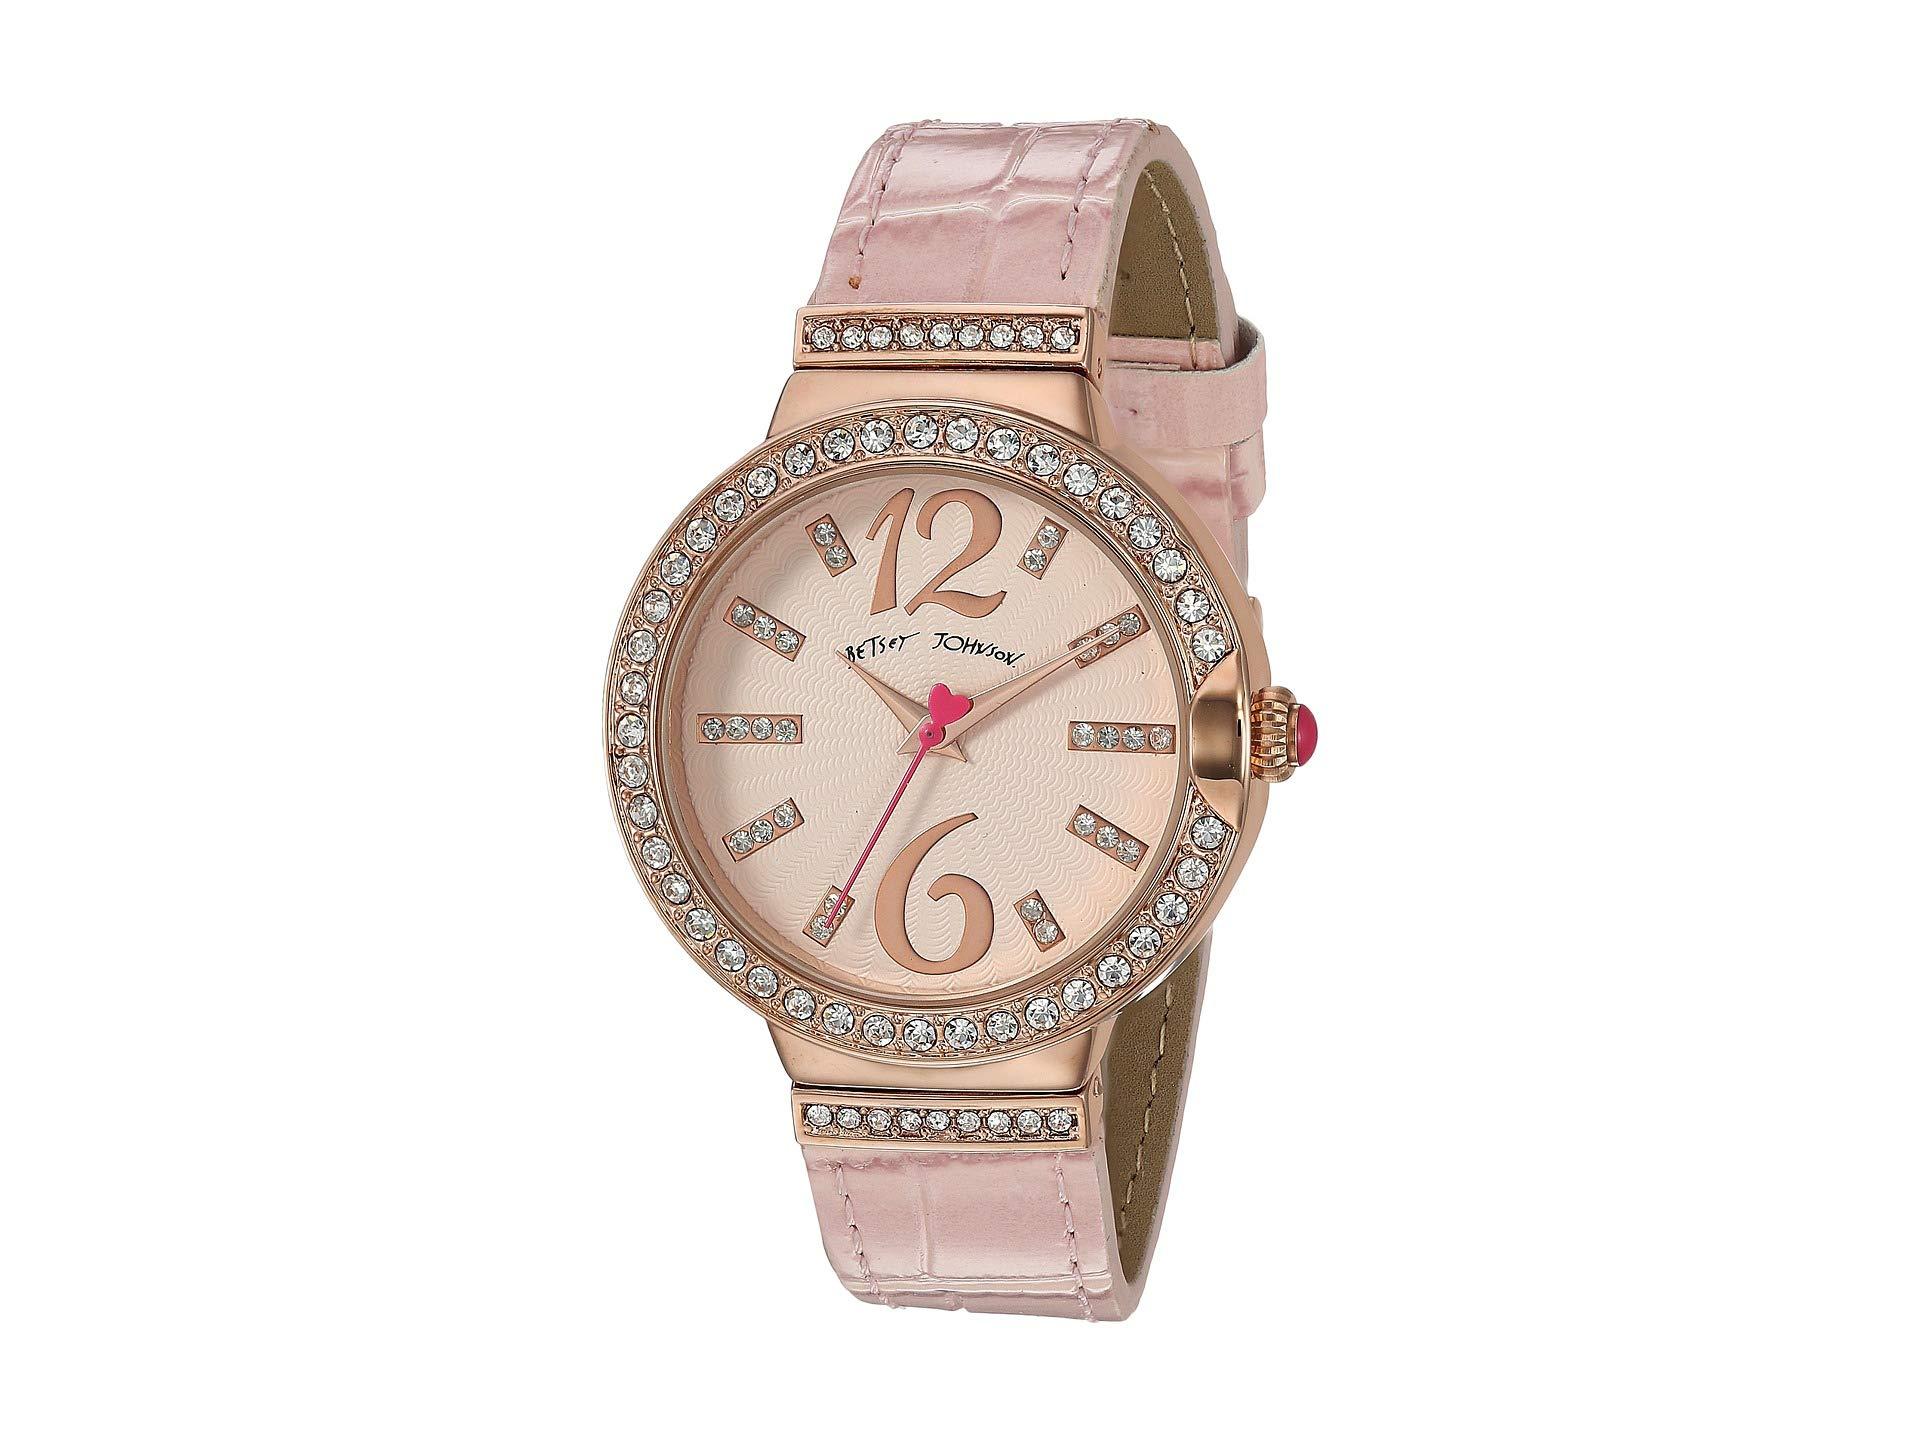 Betsey Johnson Spring Breeze Textured Watch - 37239068pnk682 (pink ...